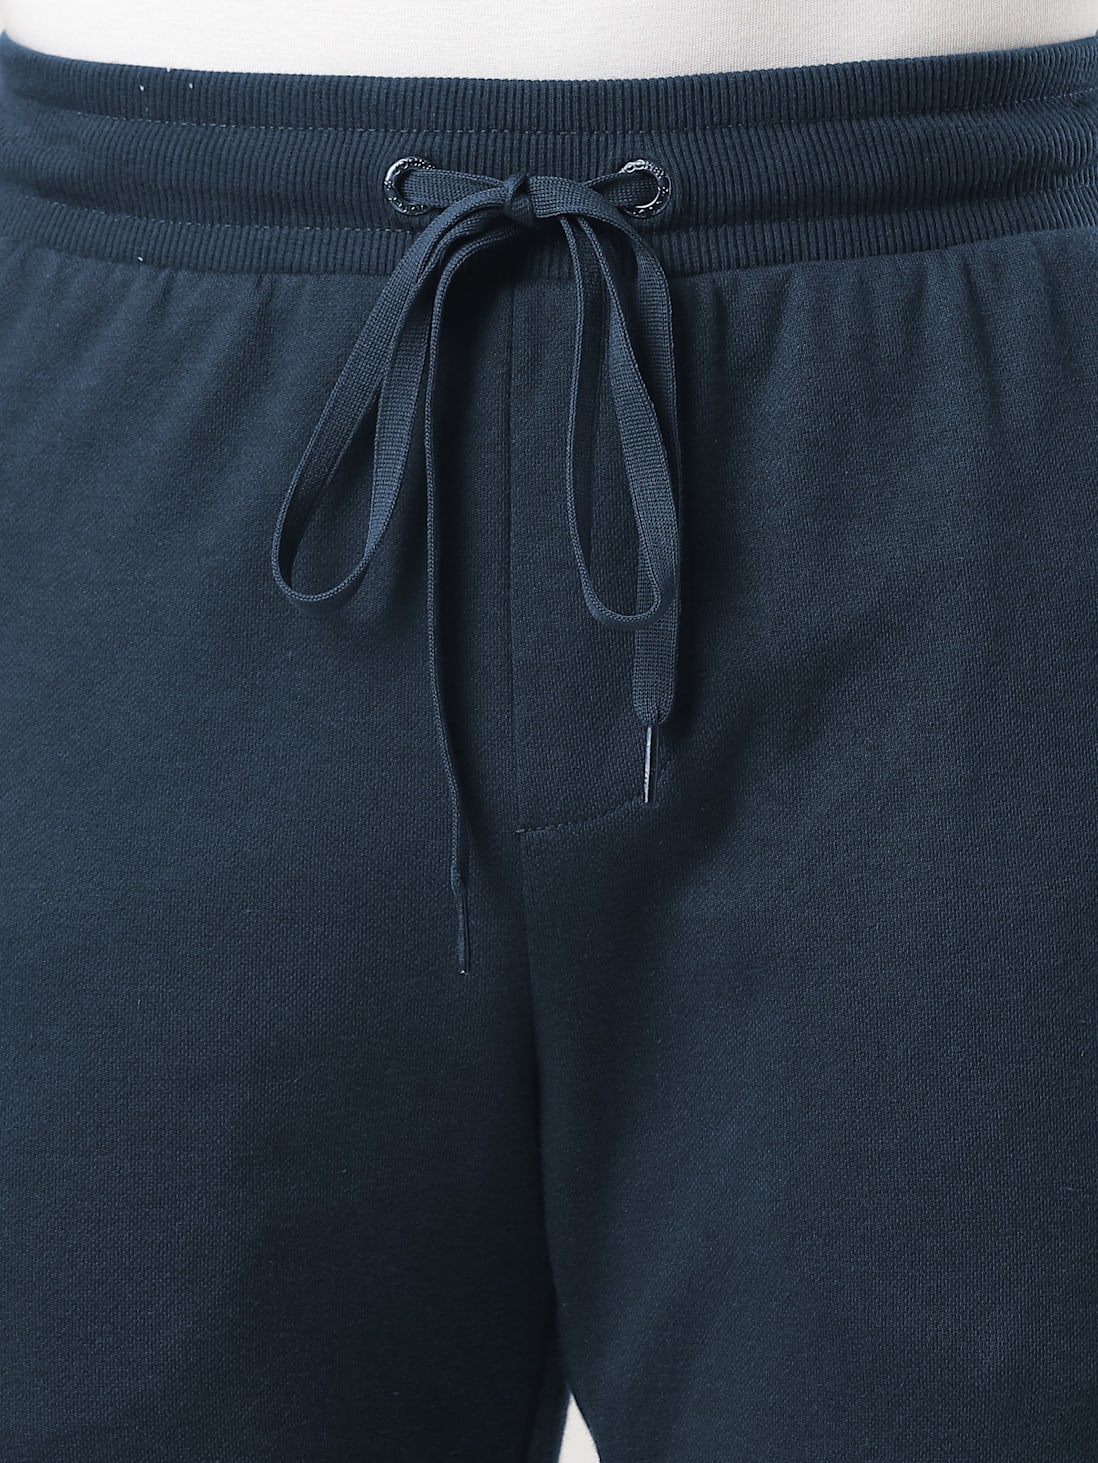 Buy Men's Super Combed Cotton Rich Pique Interlock Fabric Slim Fit ...